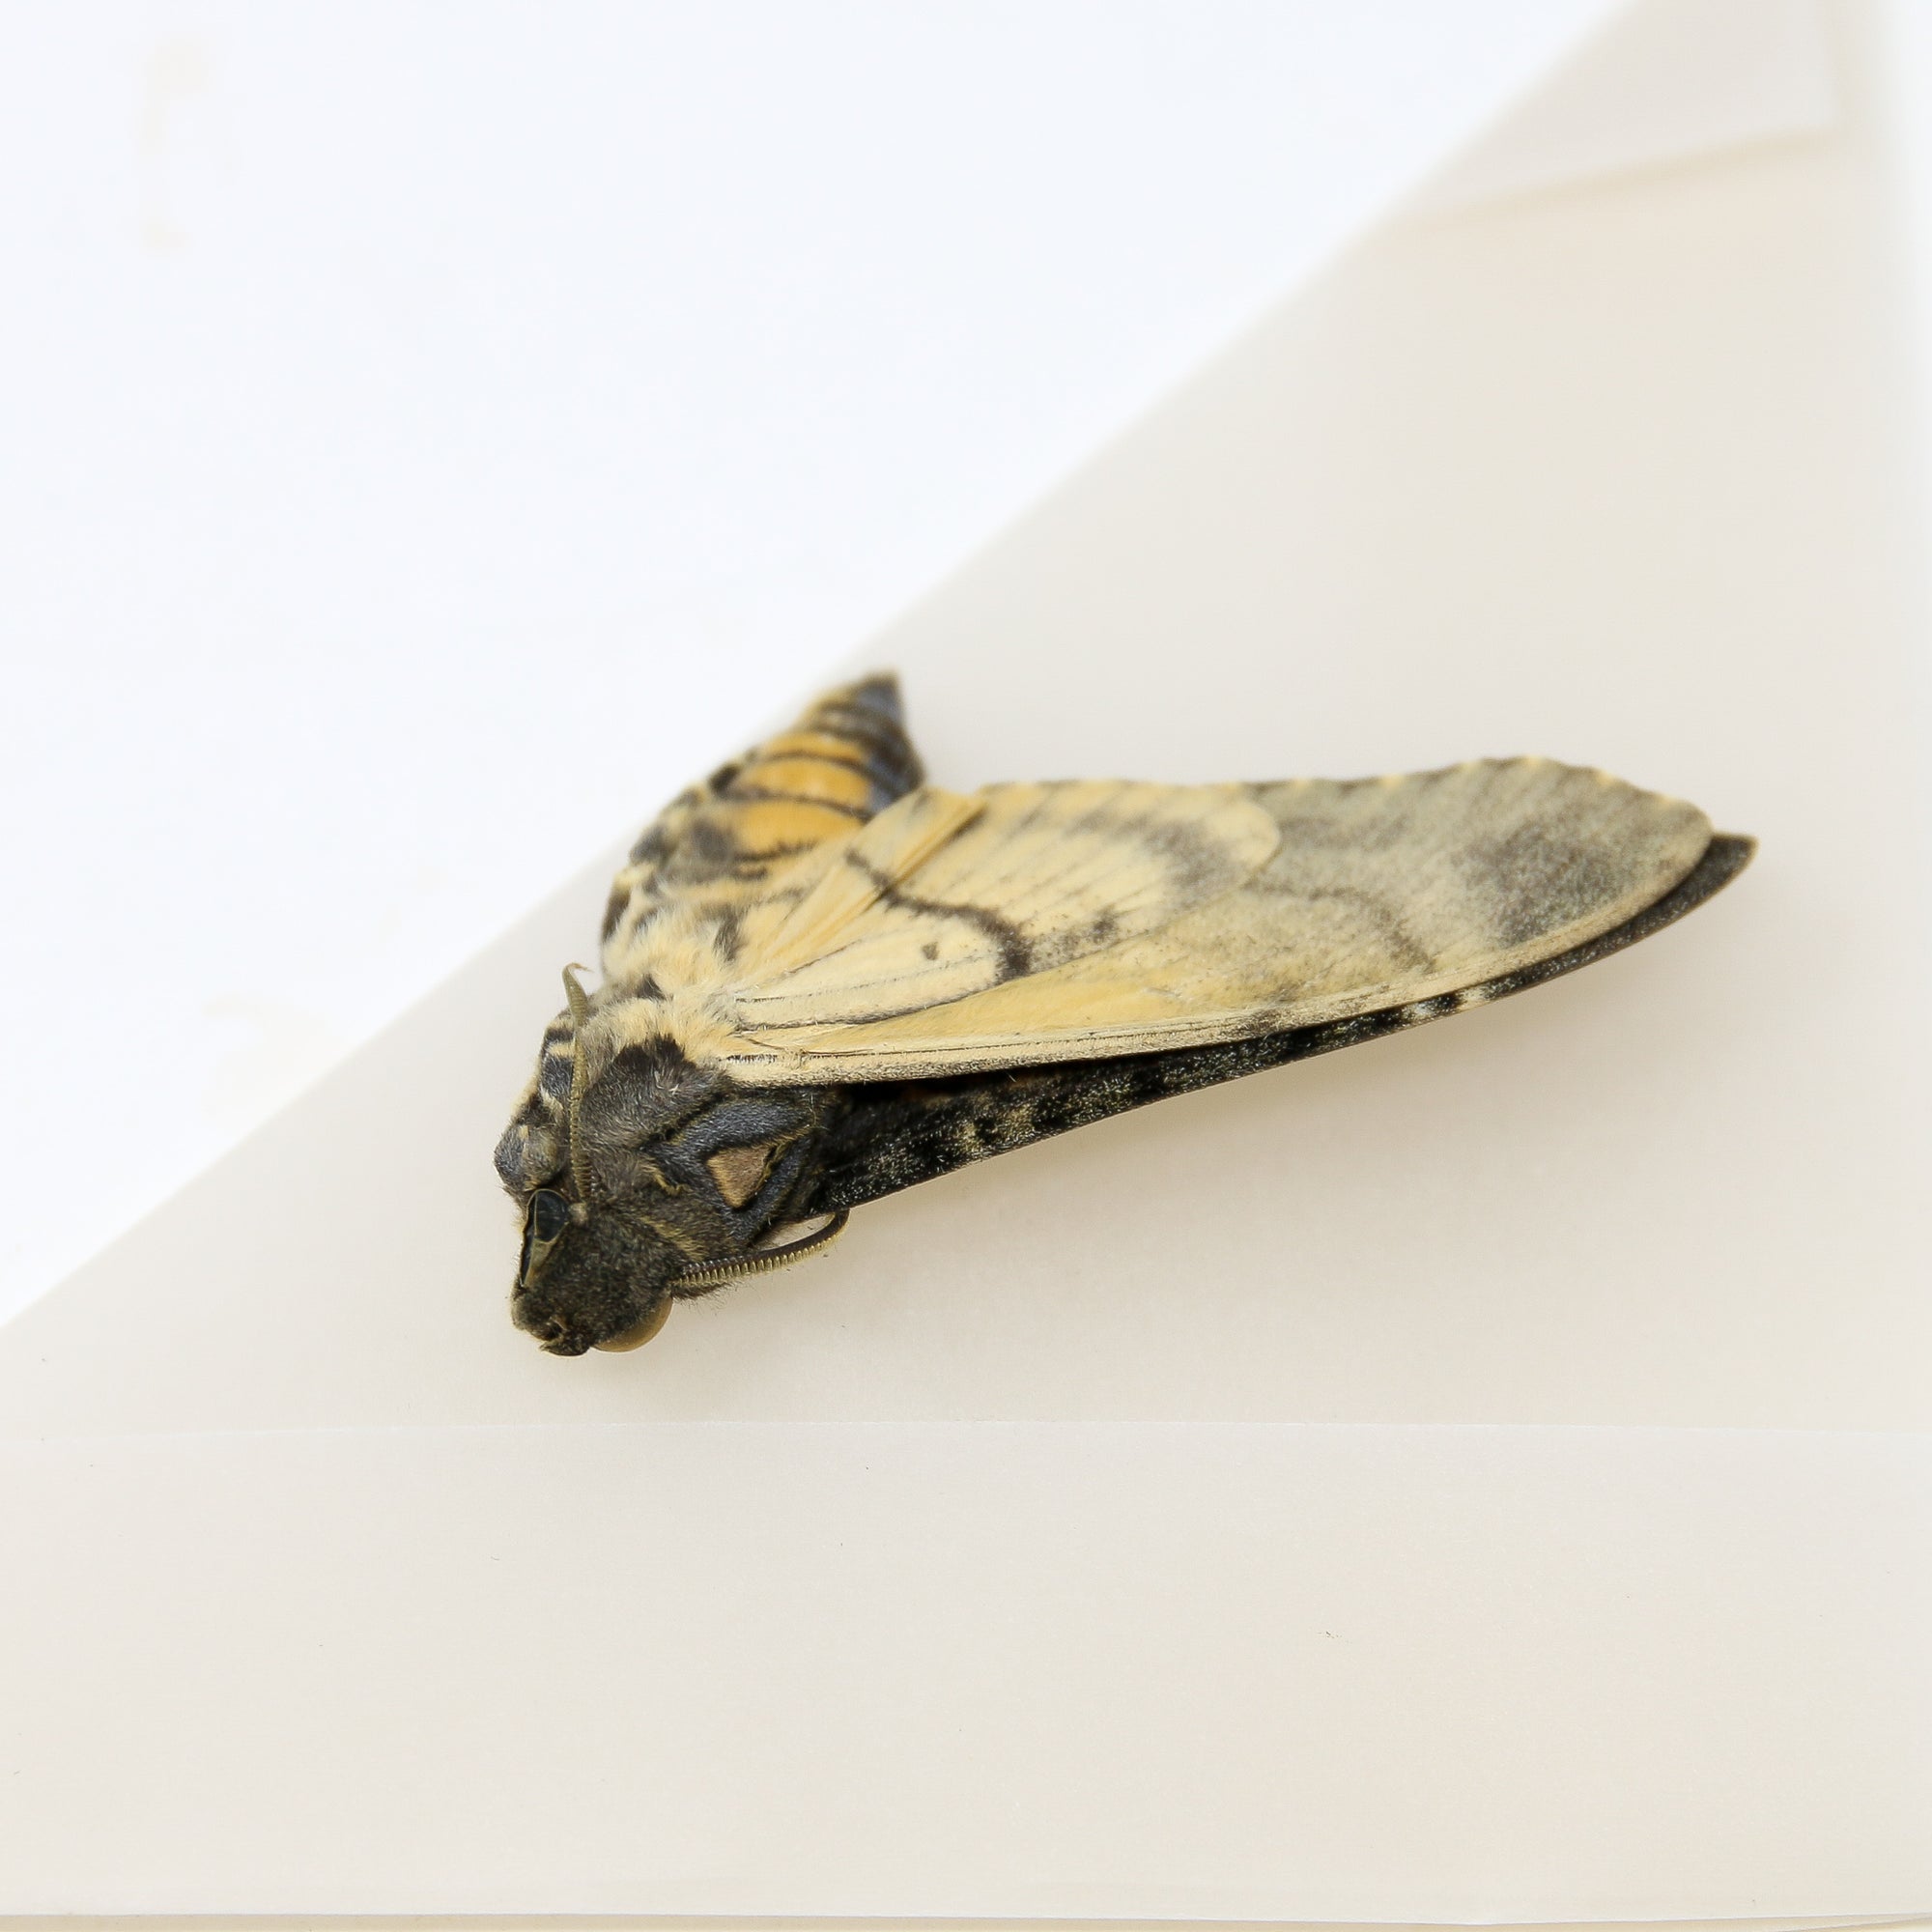 Lesser Deaths Head Hawk Moth (Acherontia styx) | A1 Unmounted Specimen | The Silence of the Lambs